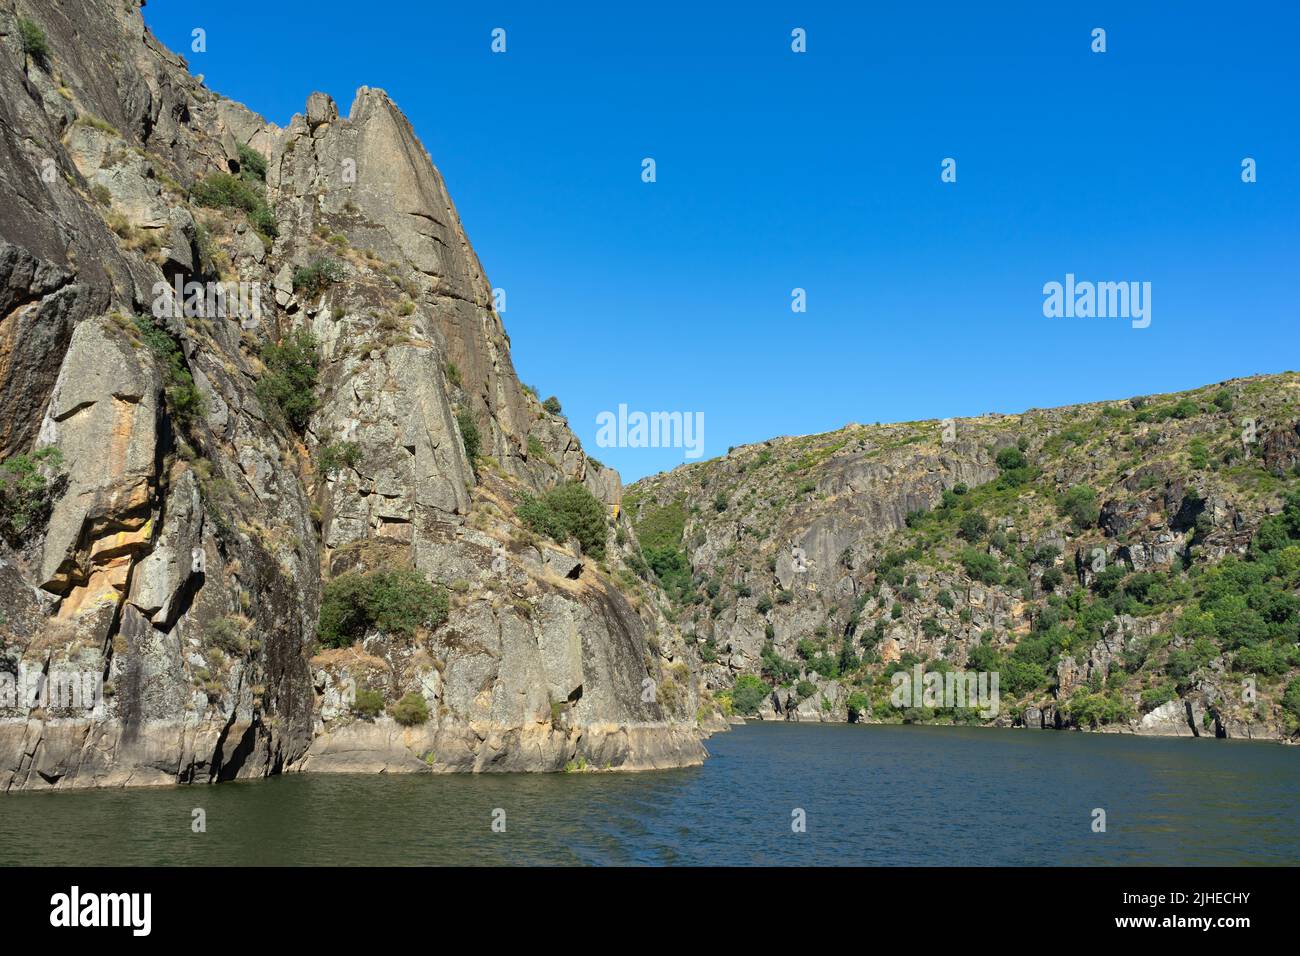 Arribes del Duero (Douro gorges) cliffs since touristic ship. Stock Photo